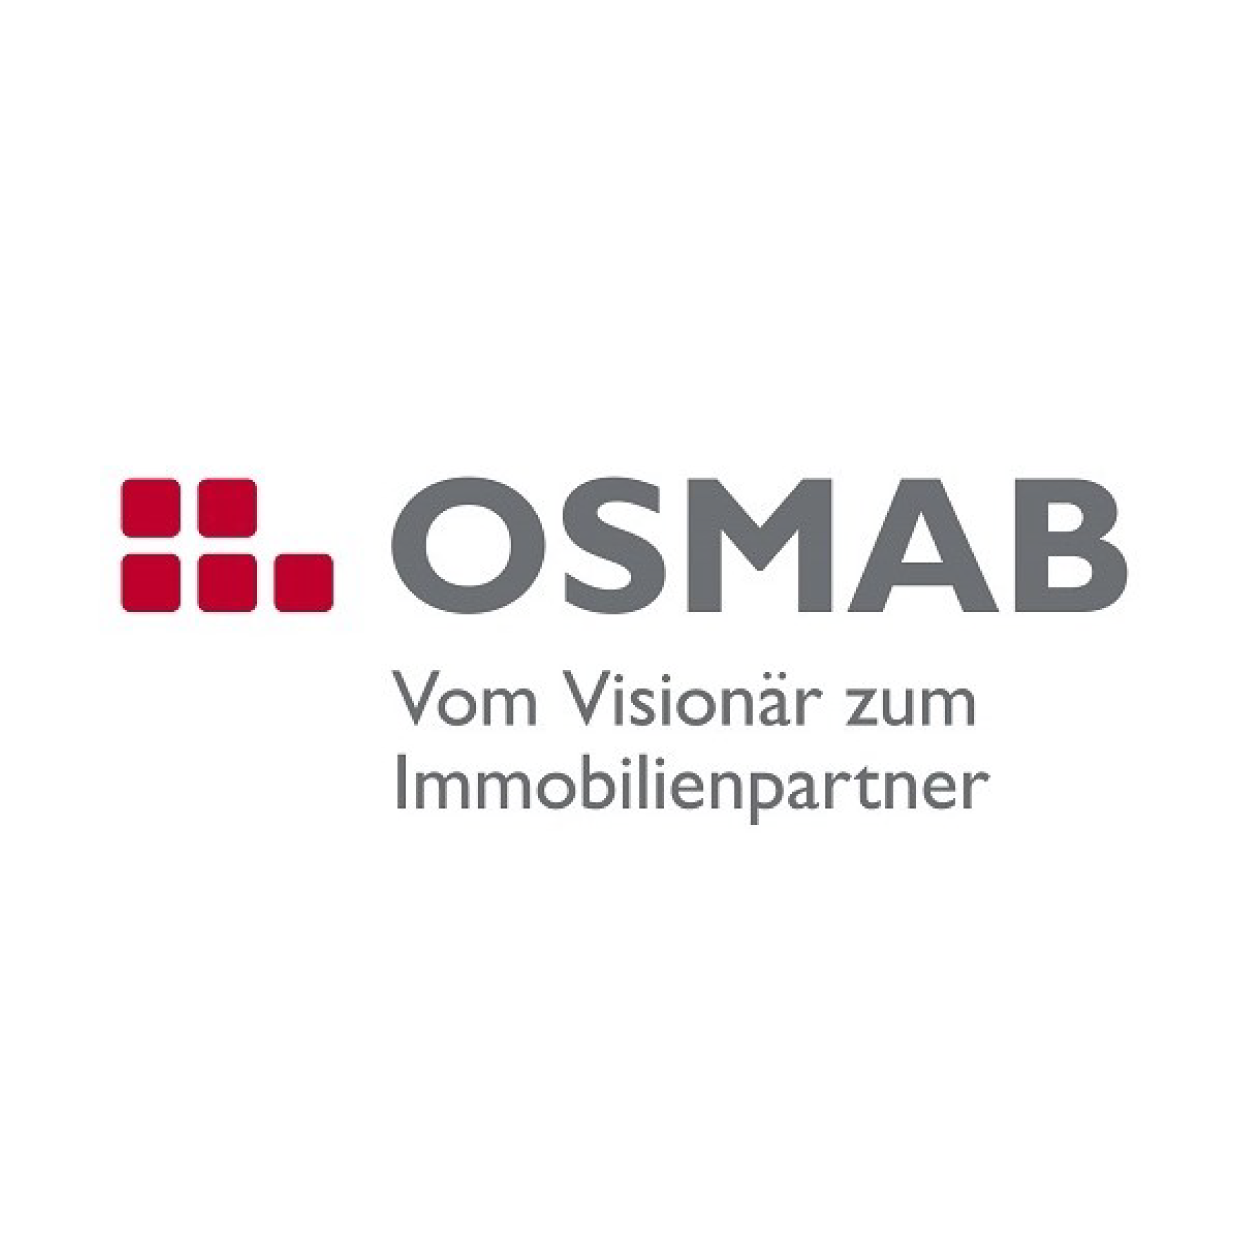 OSMAB - Vom Visionär zum Immobilienpartner